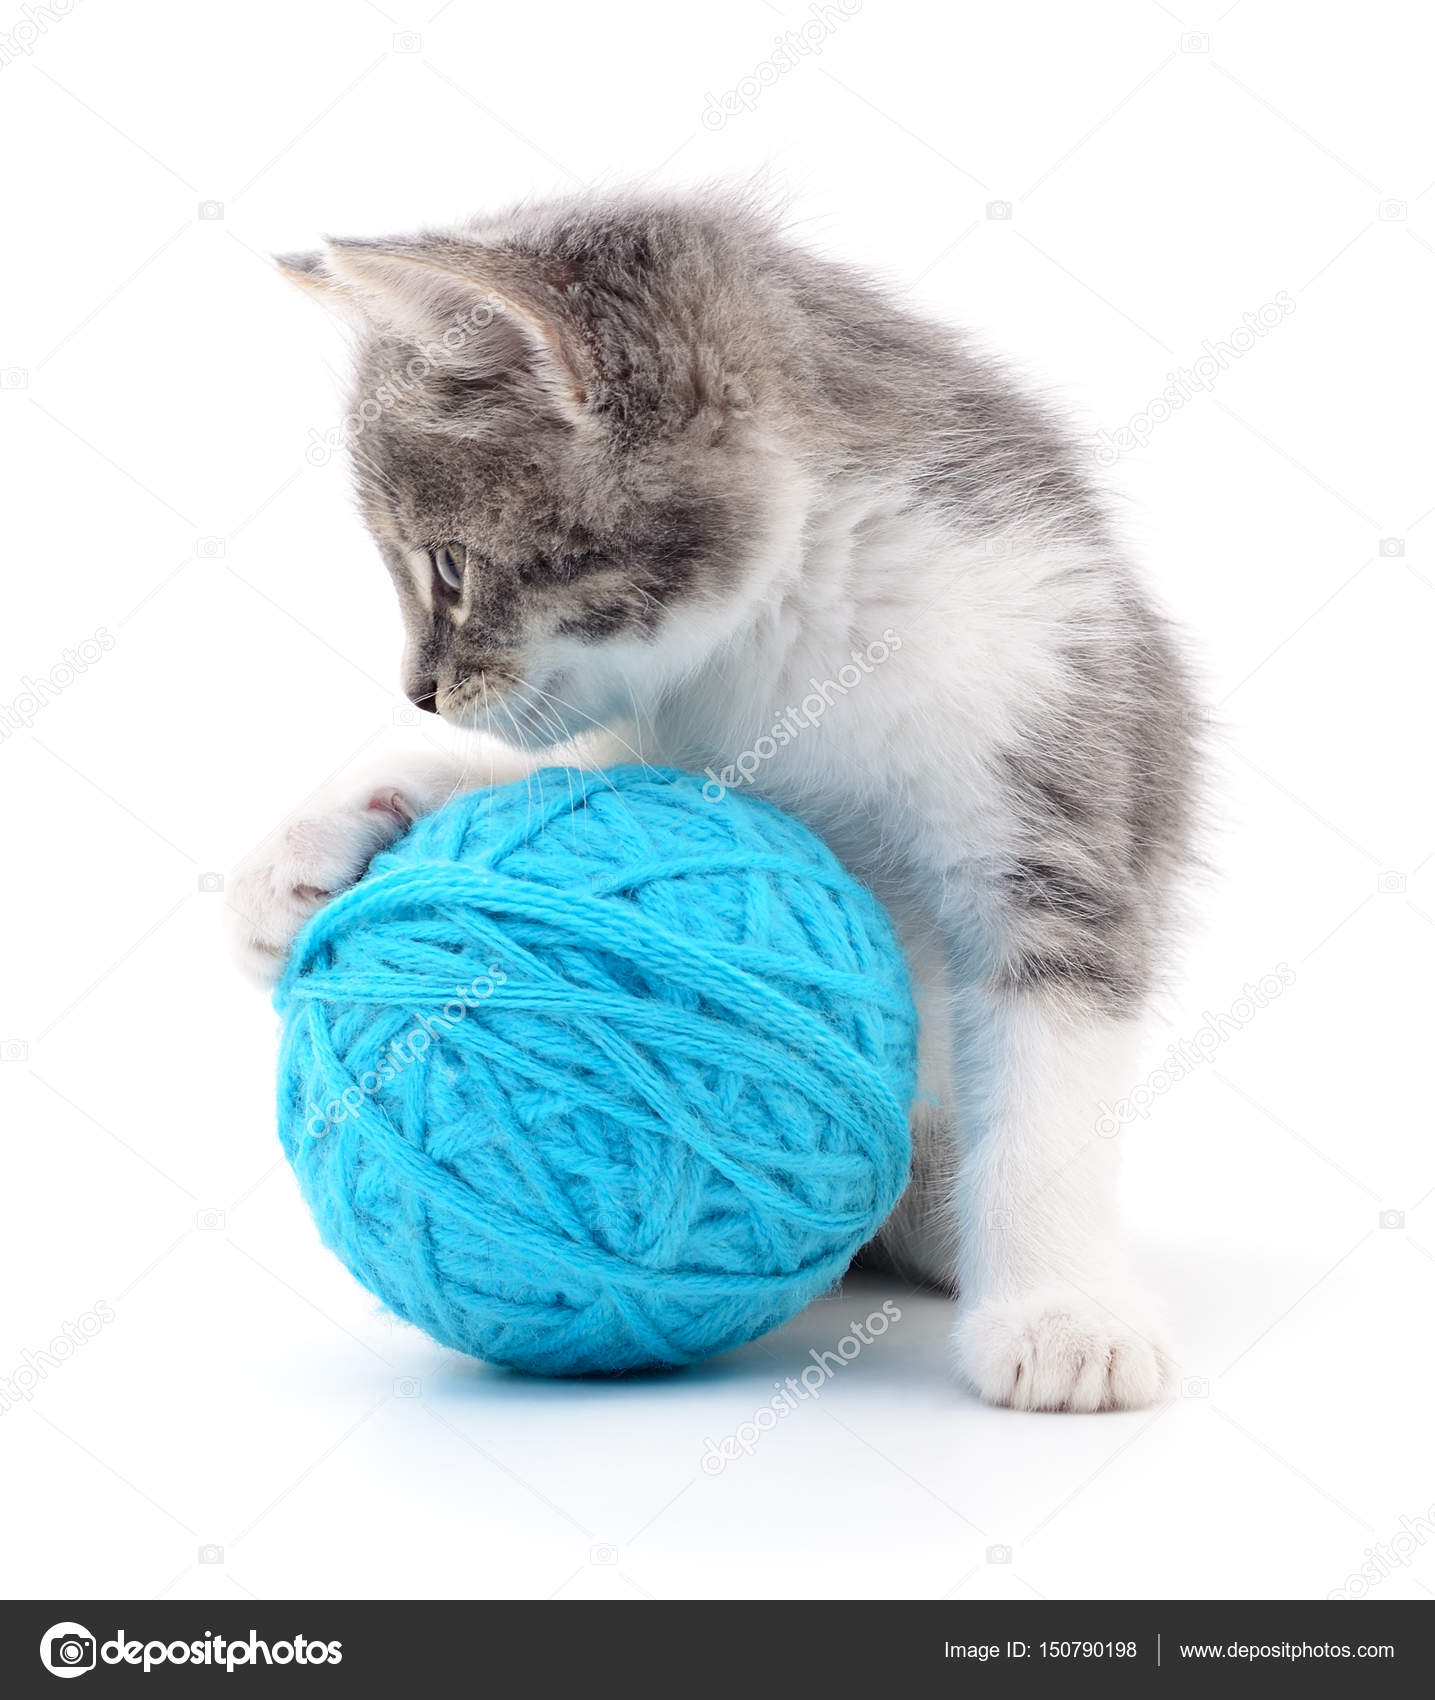 cat ball of yarn